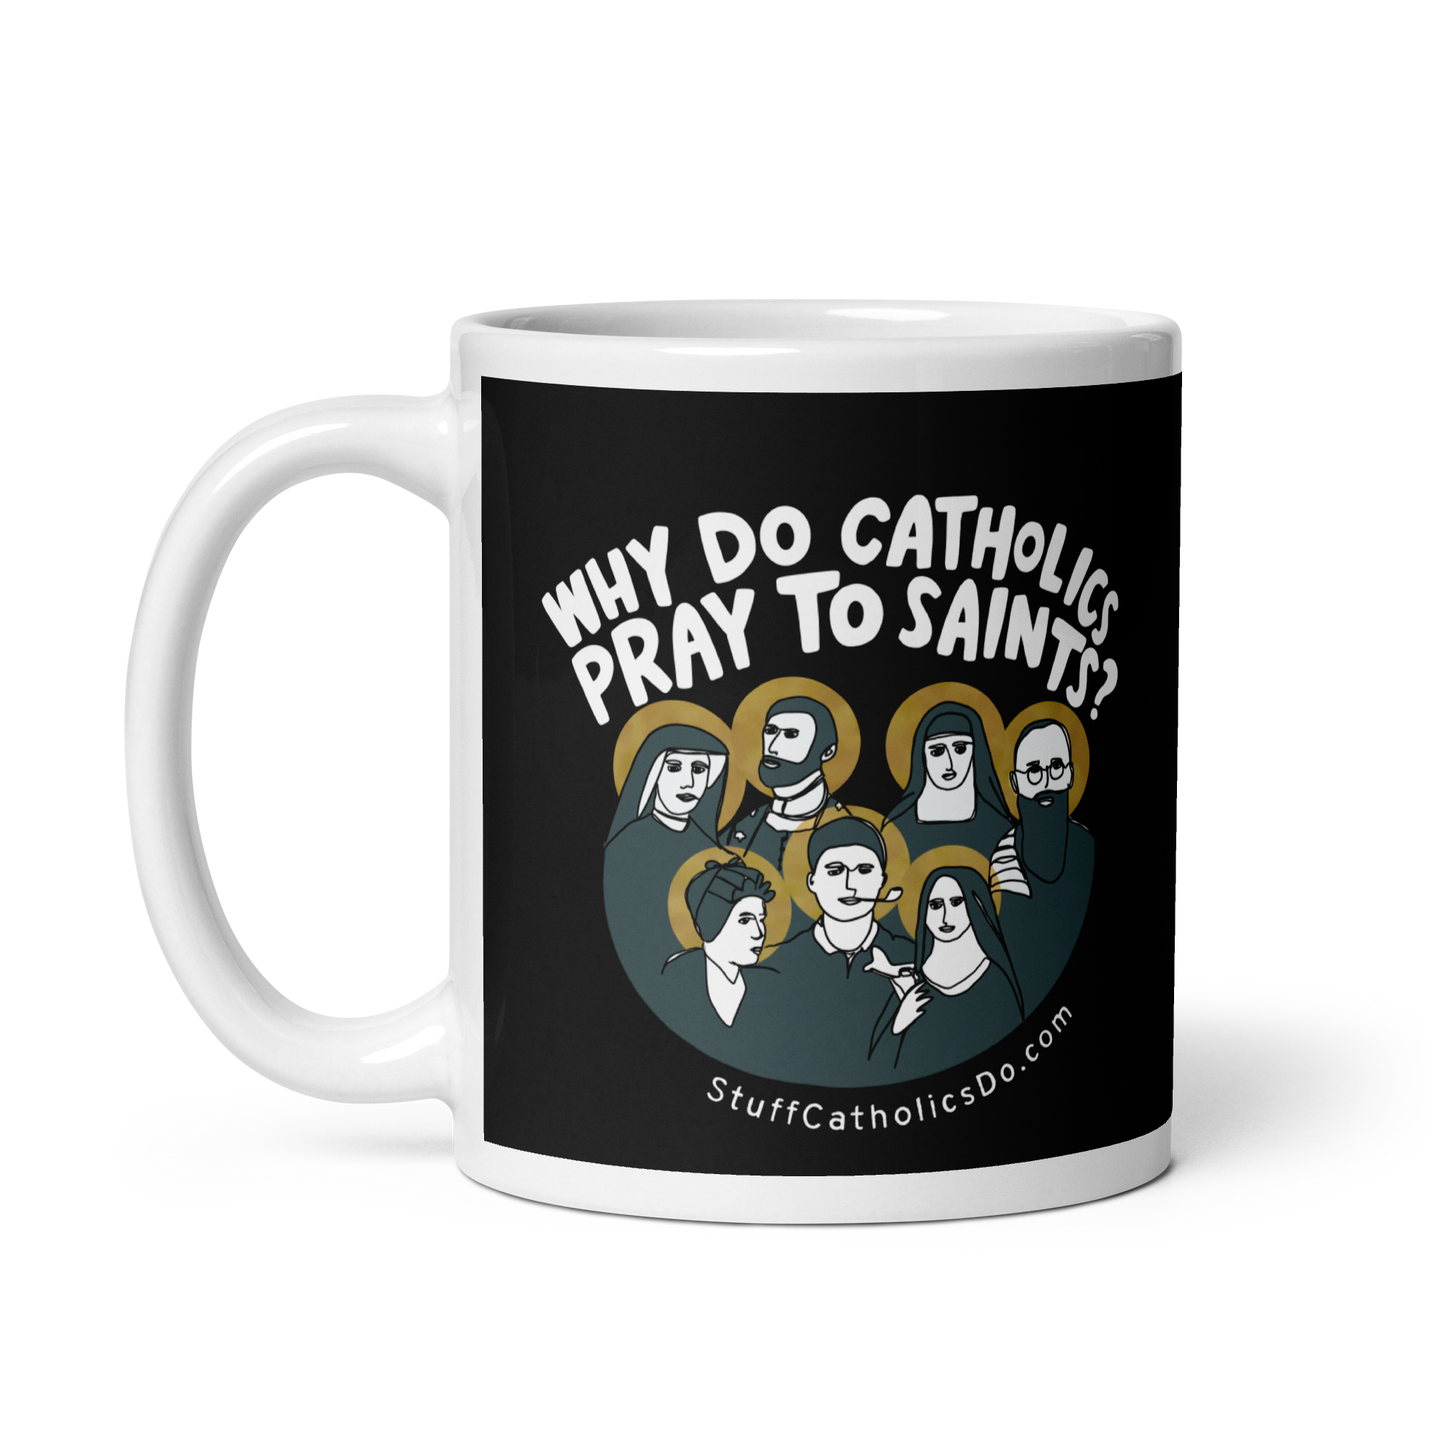 "Why Do Catholics Pray To Saints?" Mug